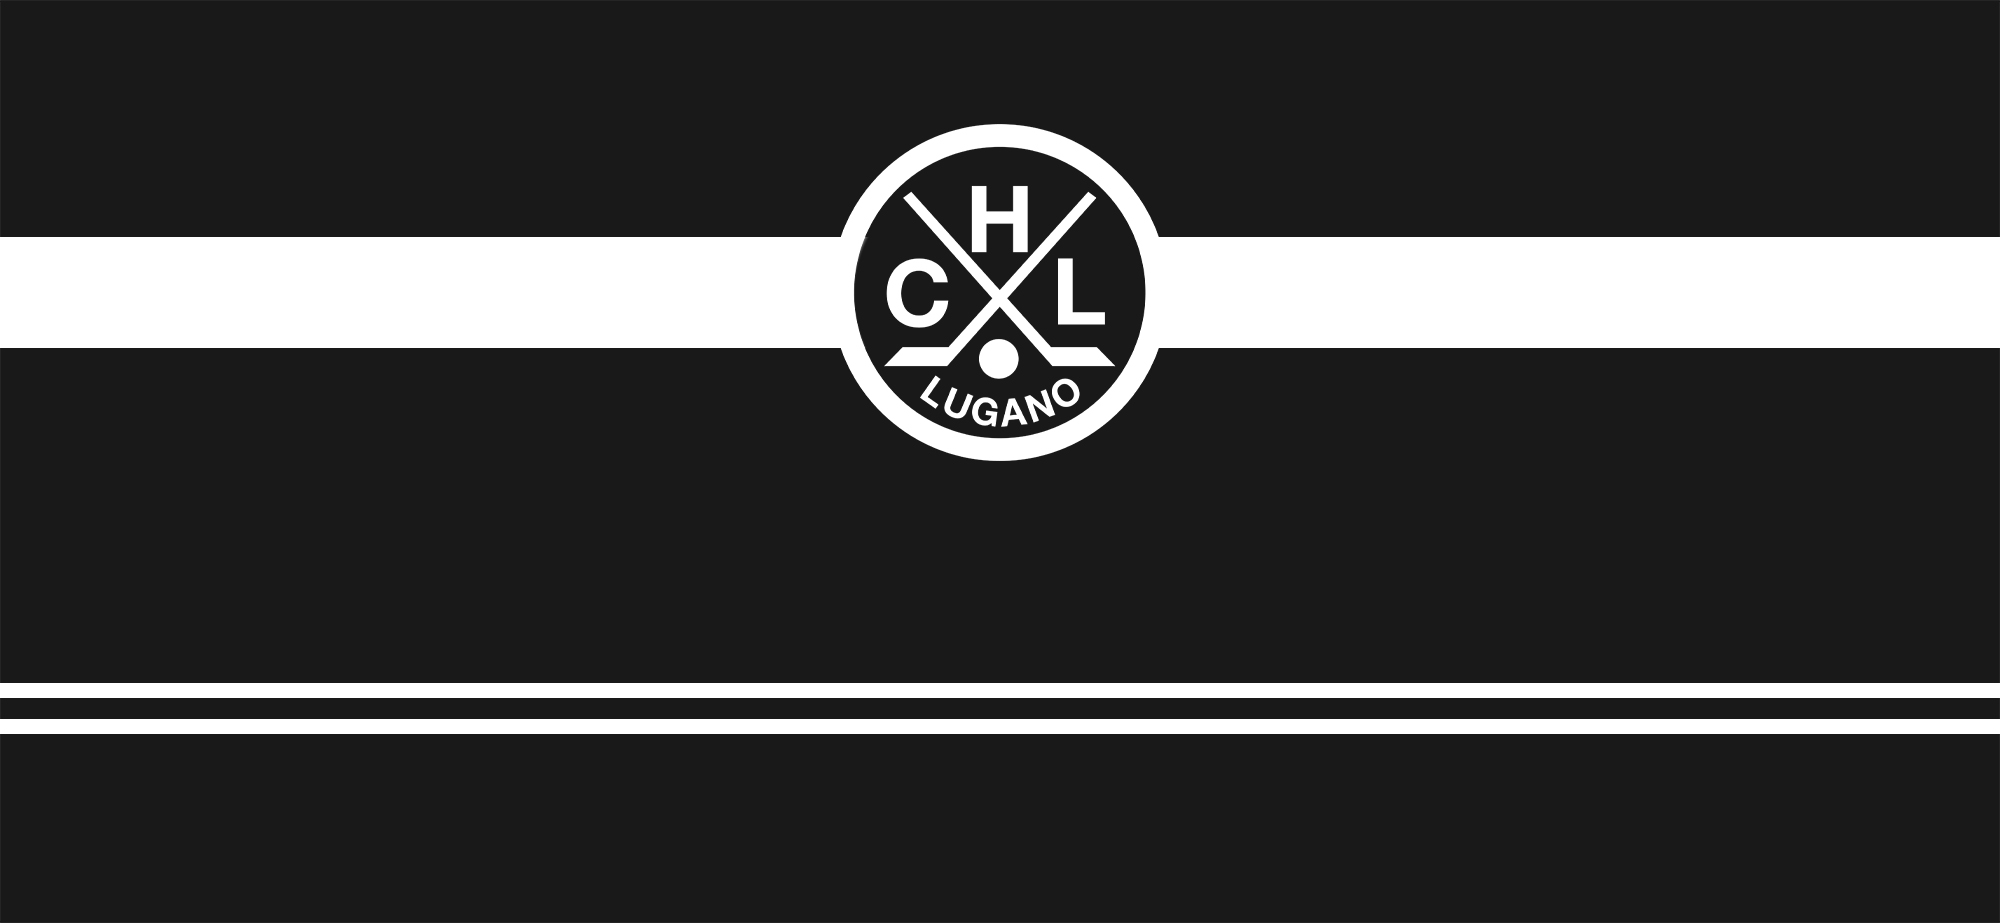 Hockey club Lugano - Sezione femminile (Ladies Team)